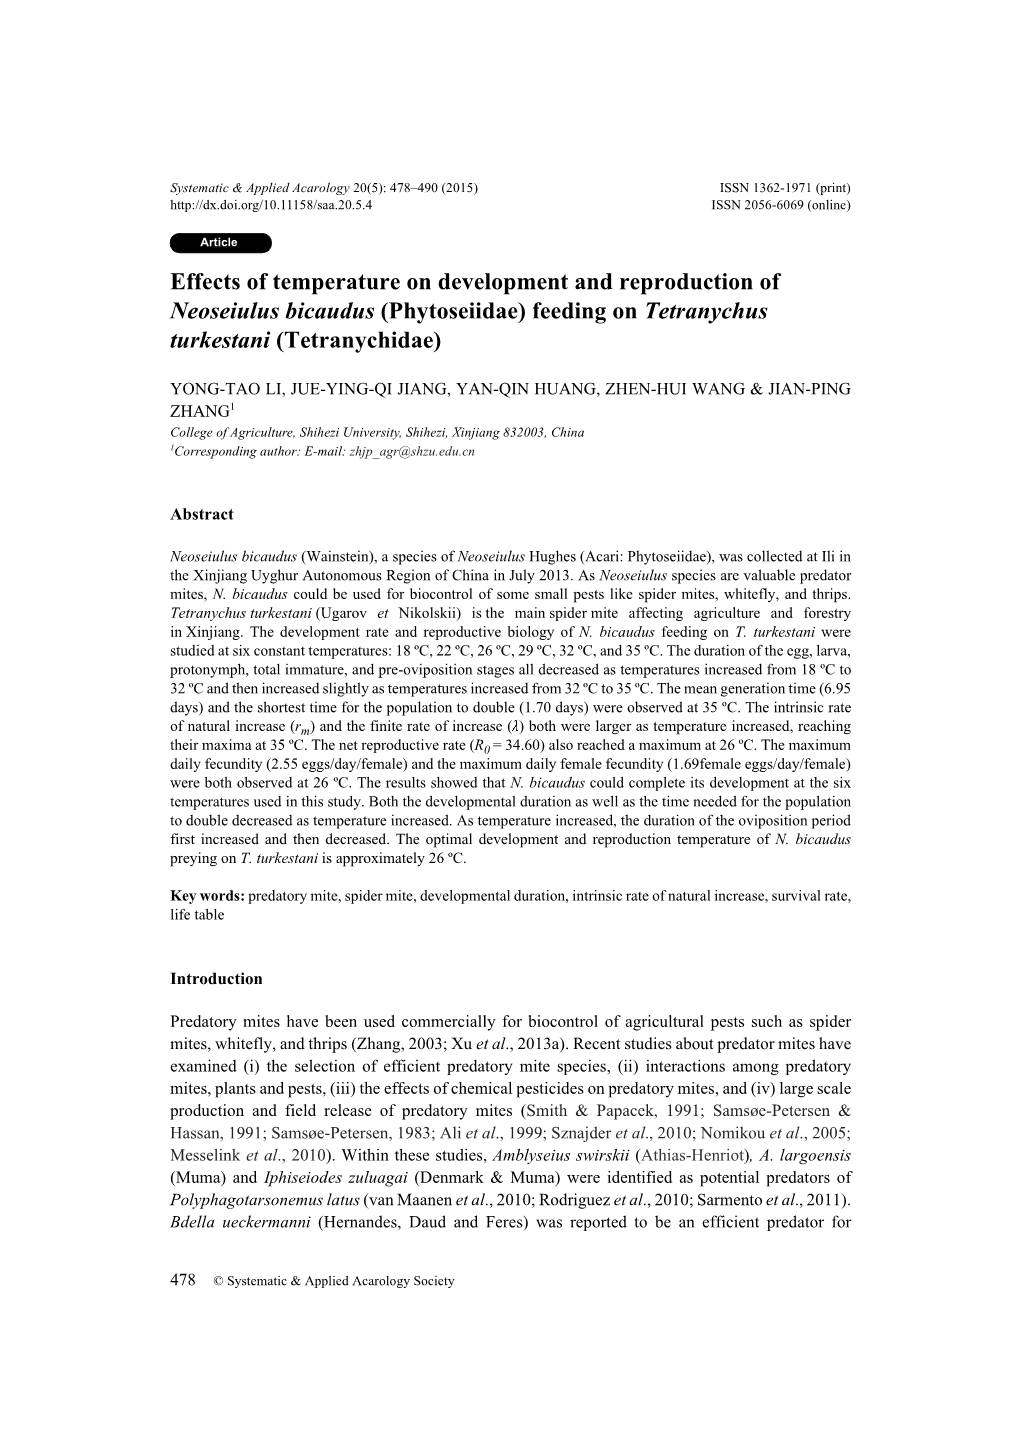 Effects of Temperature on Development and Reproduction of Neoseiulus Bicaudus (Phytoseiidae) Feeding on Tetranychus Turkestani (Tetranychidae)